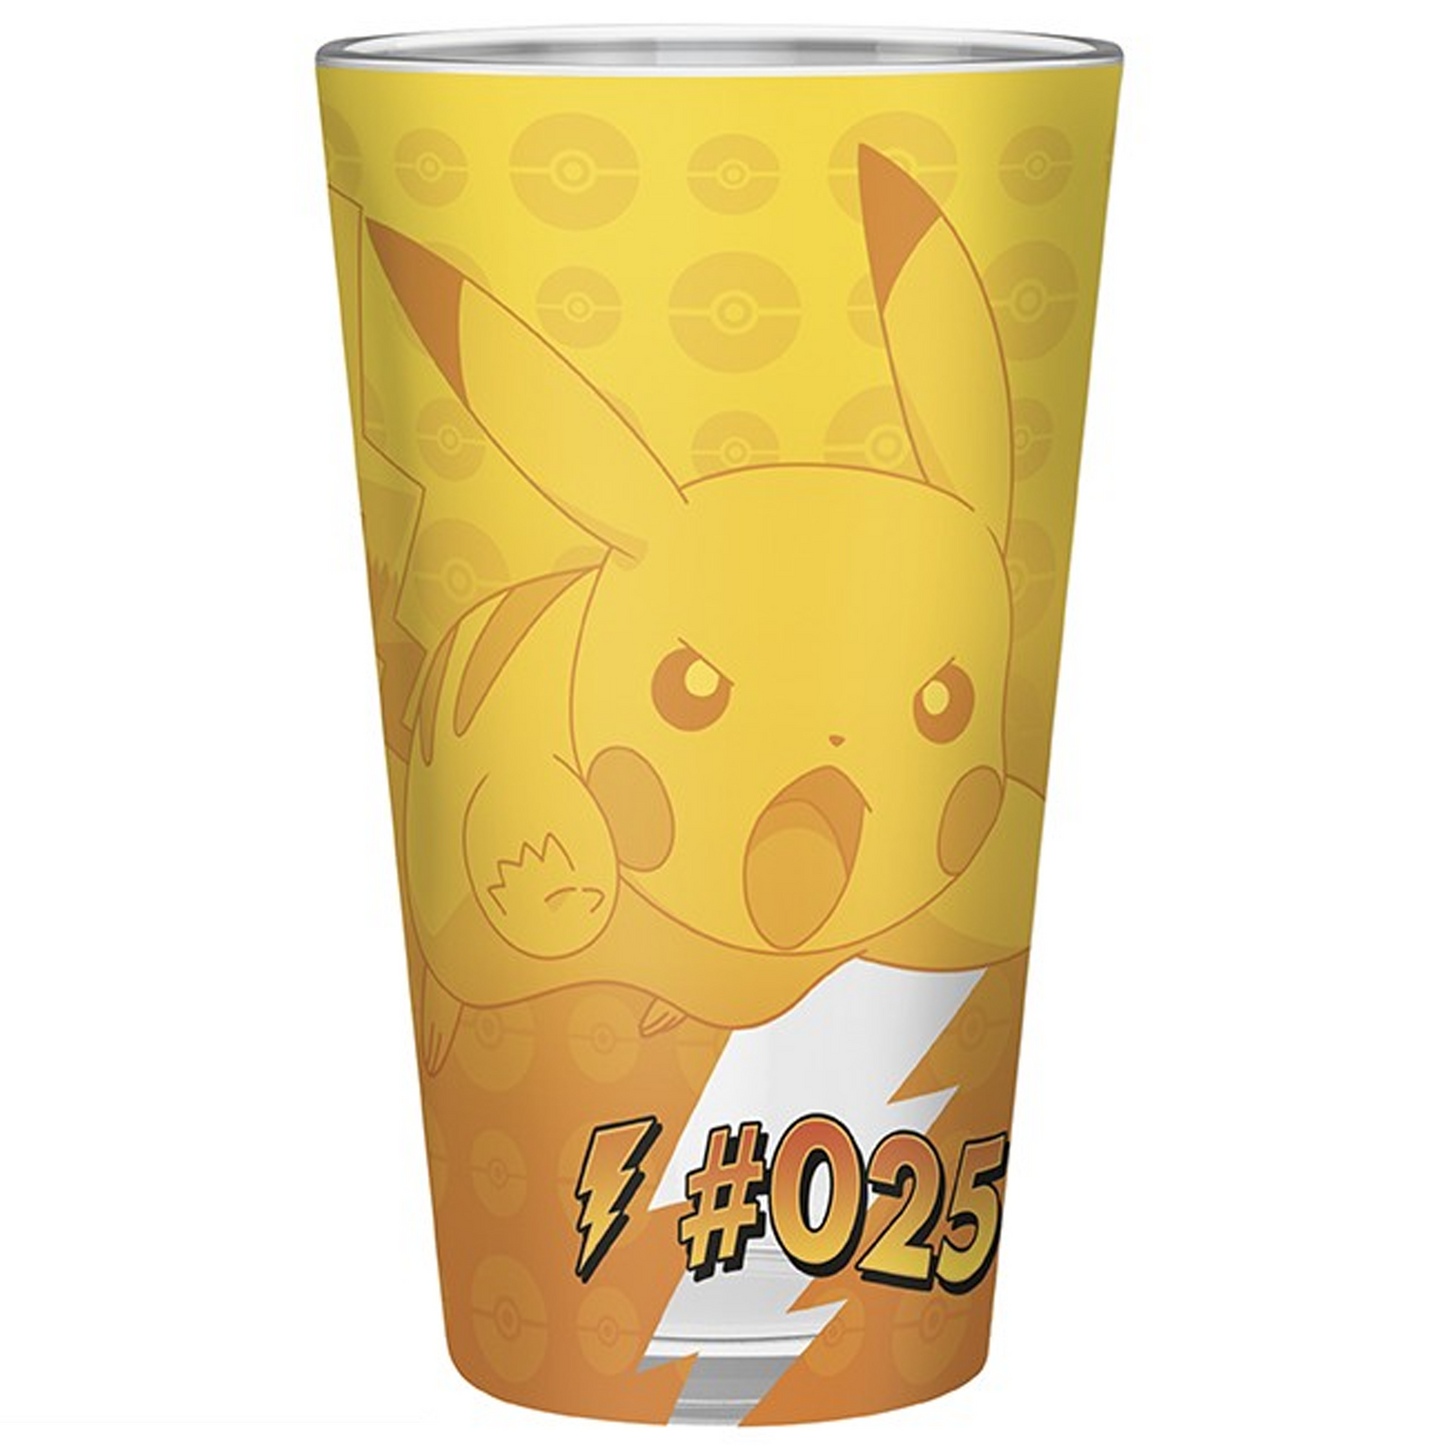 Pikachu #025 Premium Foiled Pokémon Drinking Glass (Back) | Happy Piranha